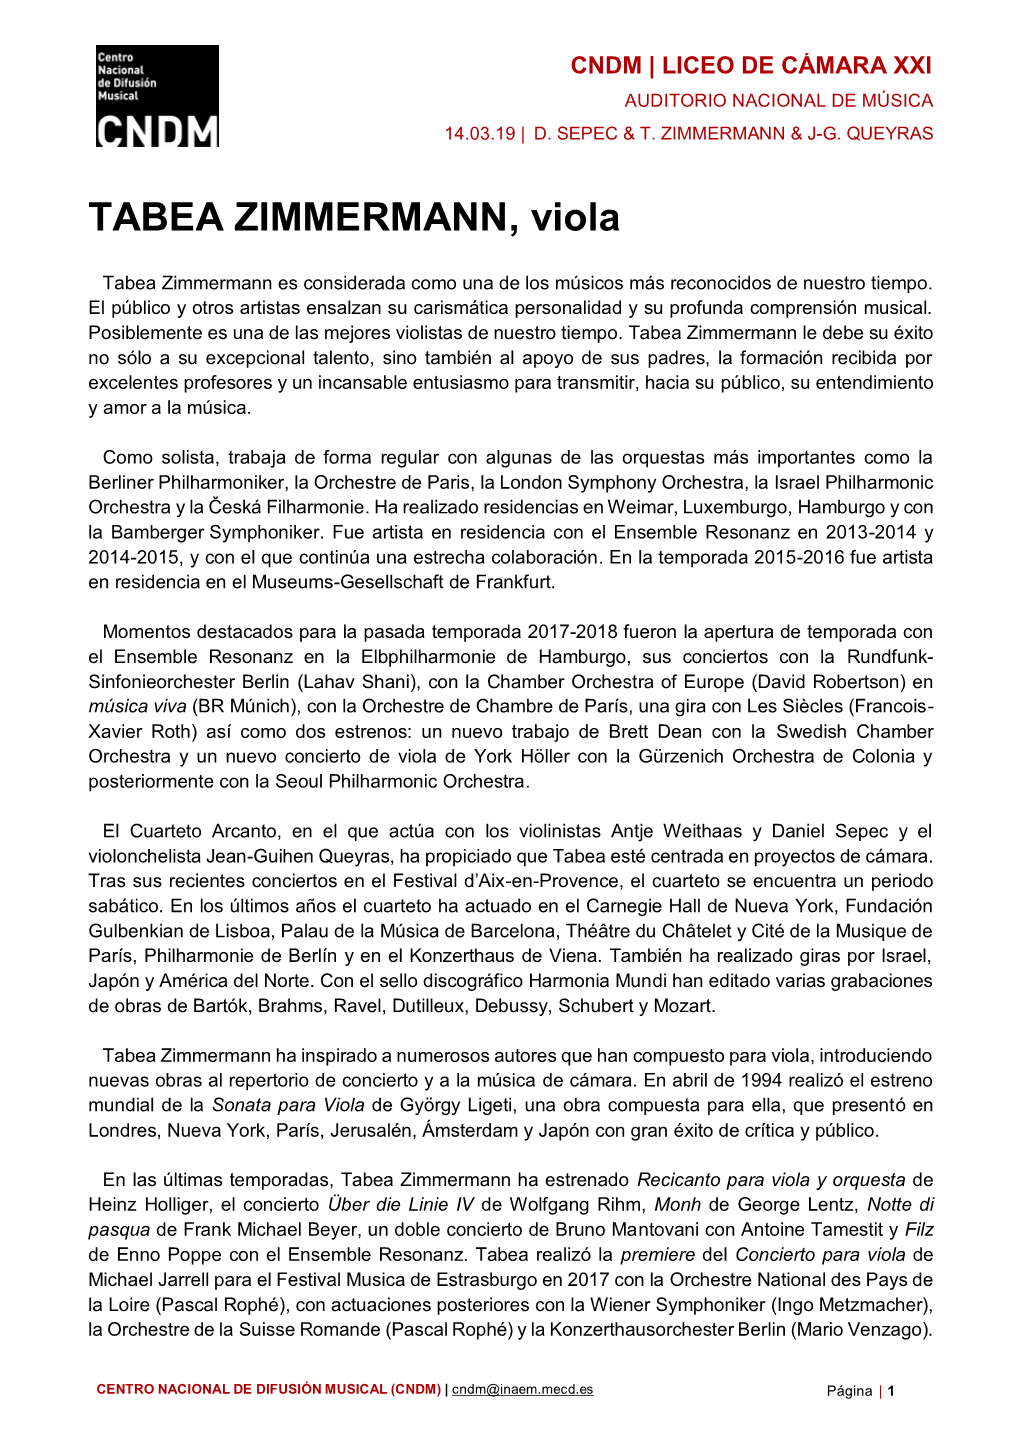 TABEA ZIMMERMANN, Viola